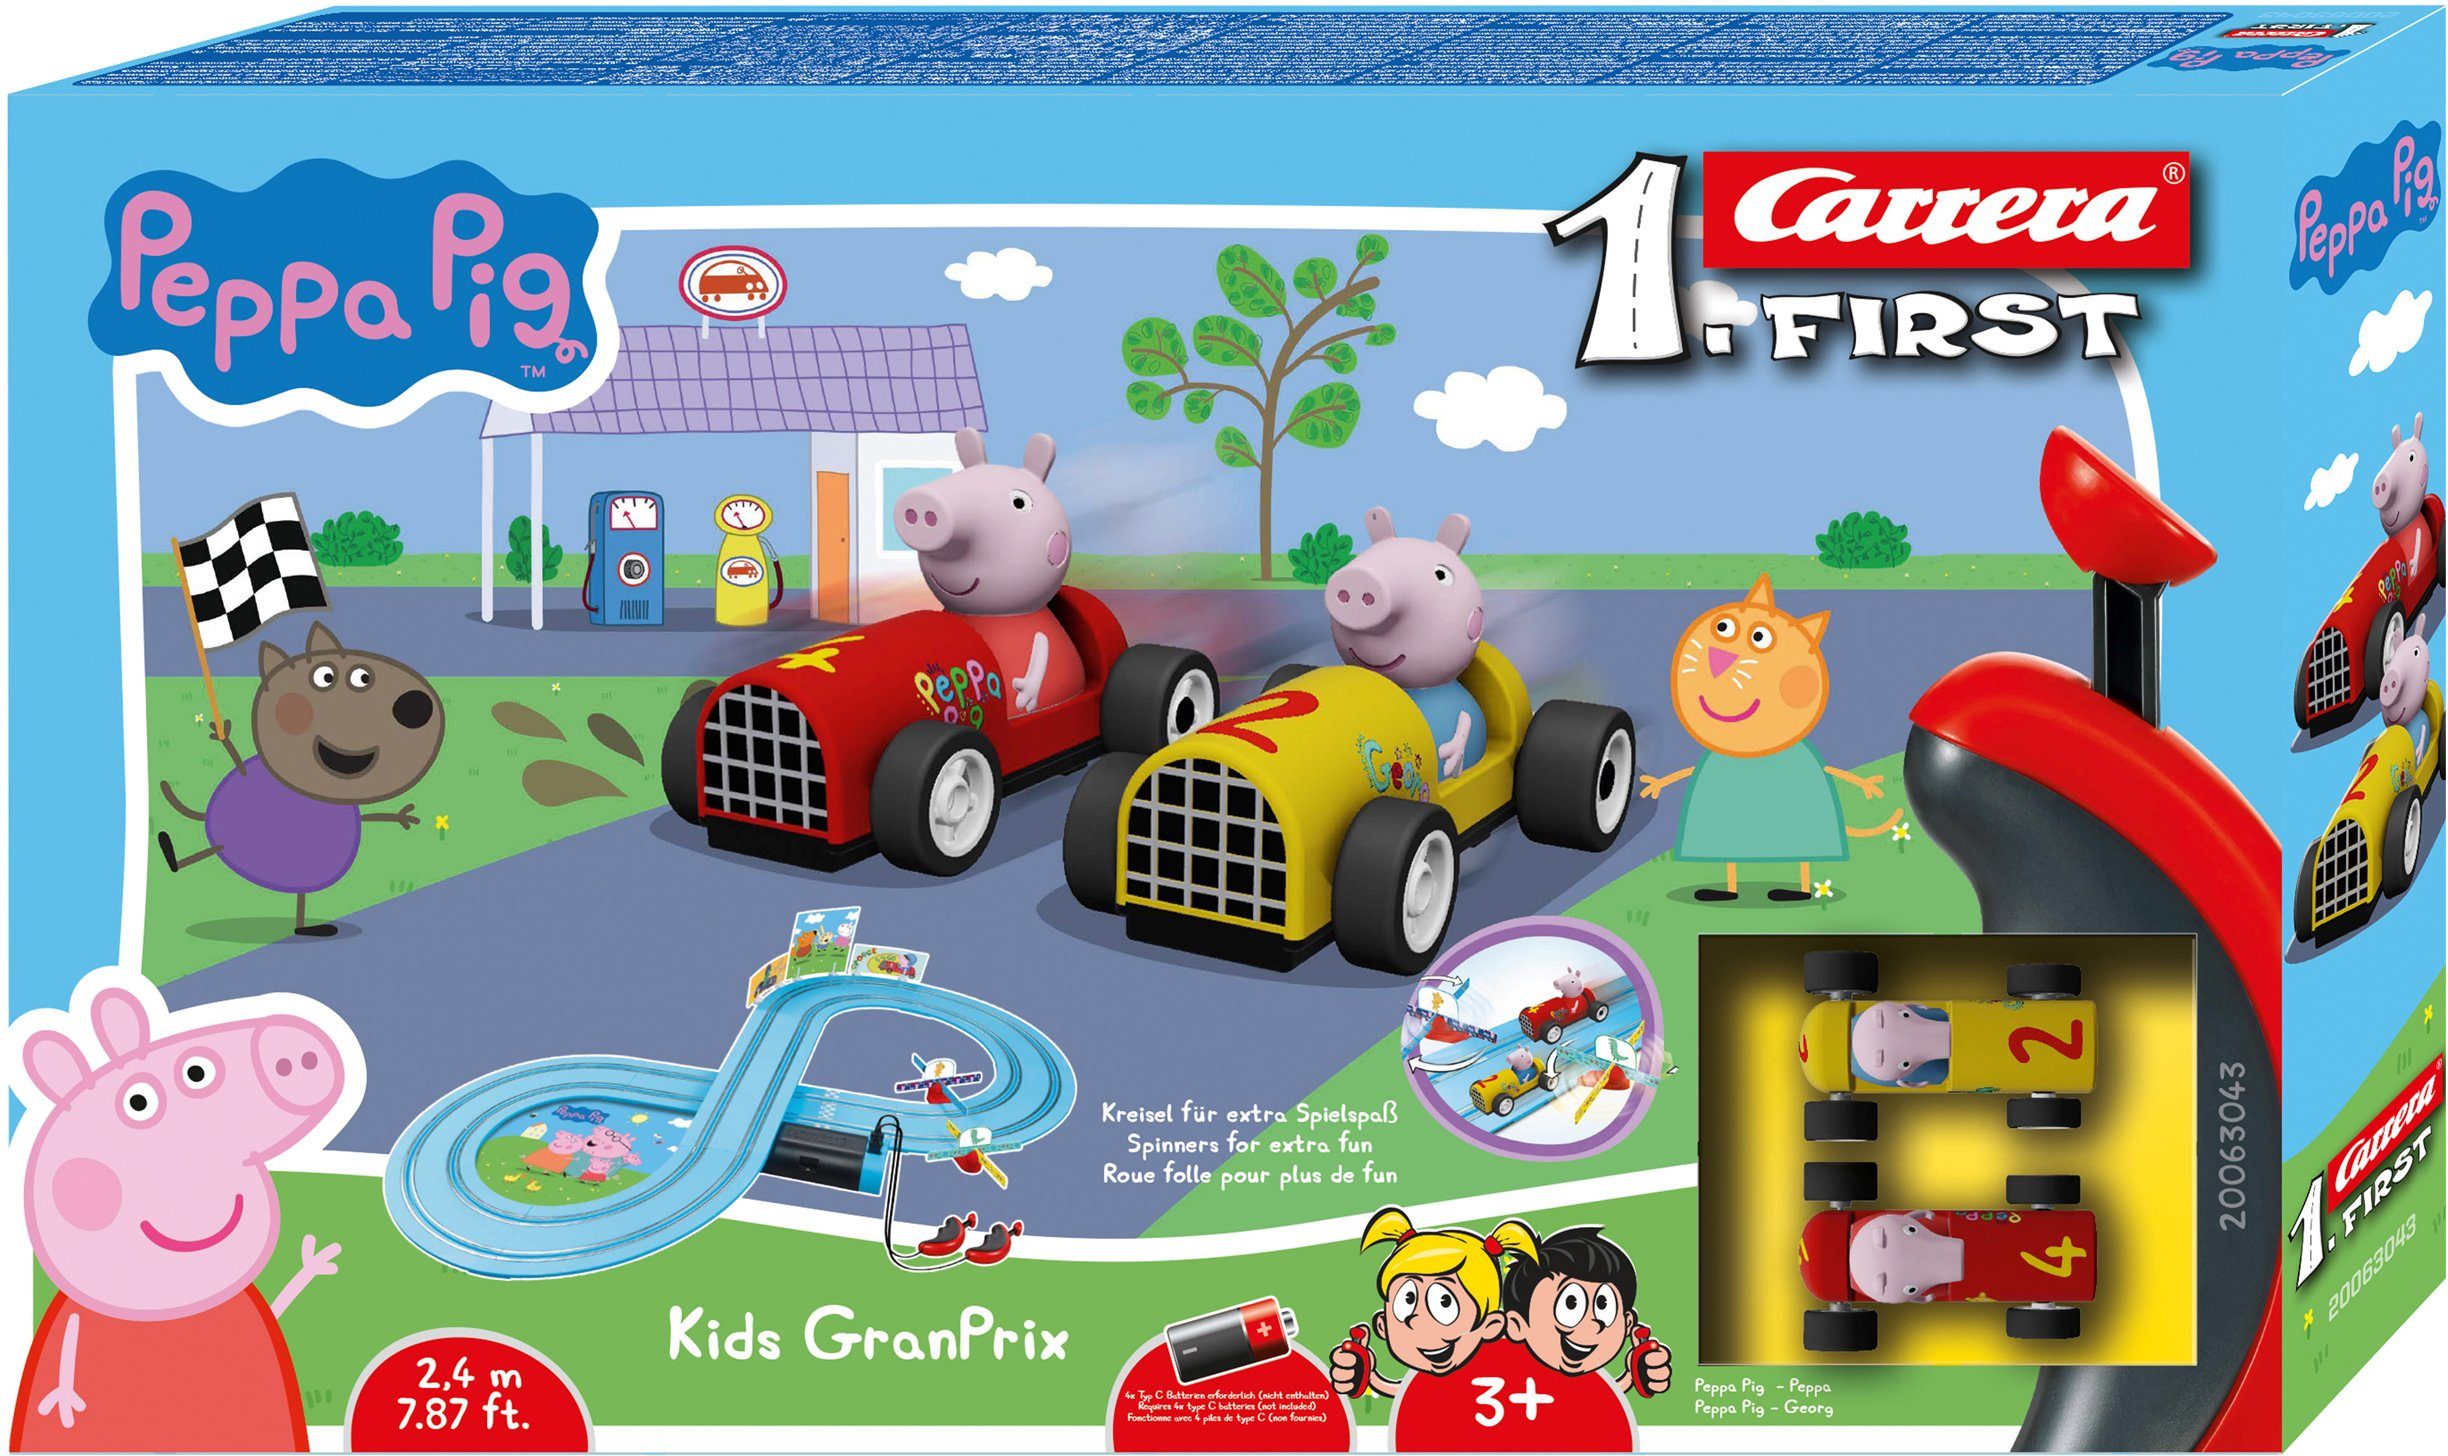 Carrera® Autorennbahn Carrera® First - Peppa Pig Kids GrandPrix  (Streckenlänge 2,4 m), Inklusive 2 Fahrzeugen: Peppa Pig - Peppa und Peppa  Pig - George